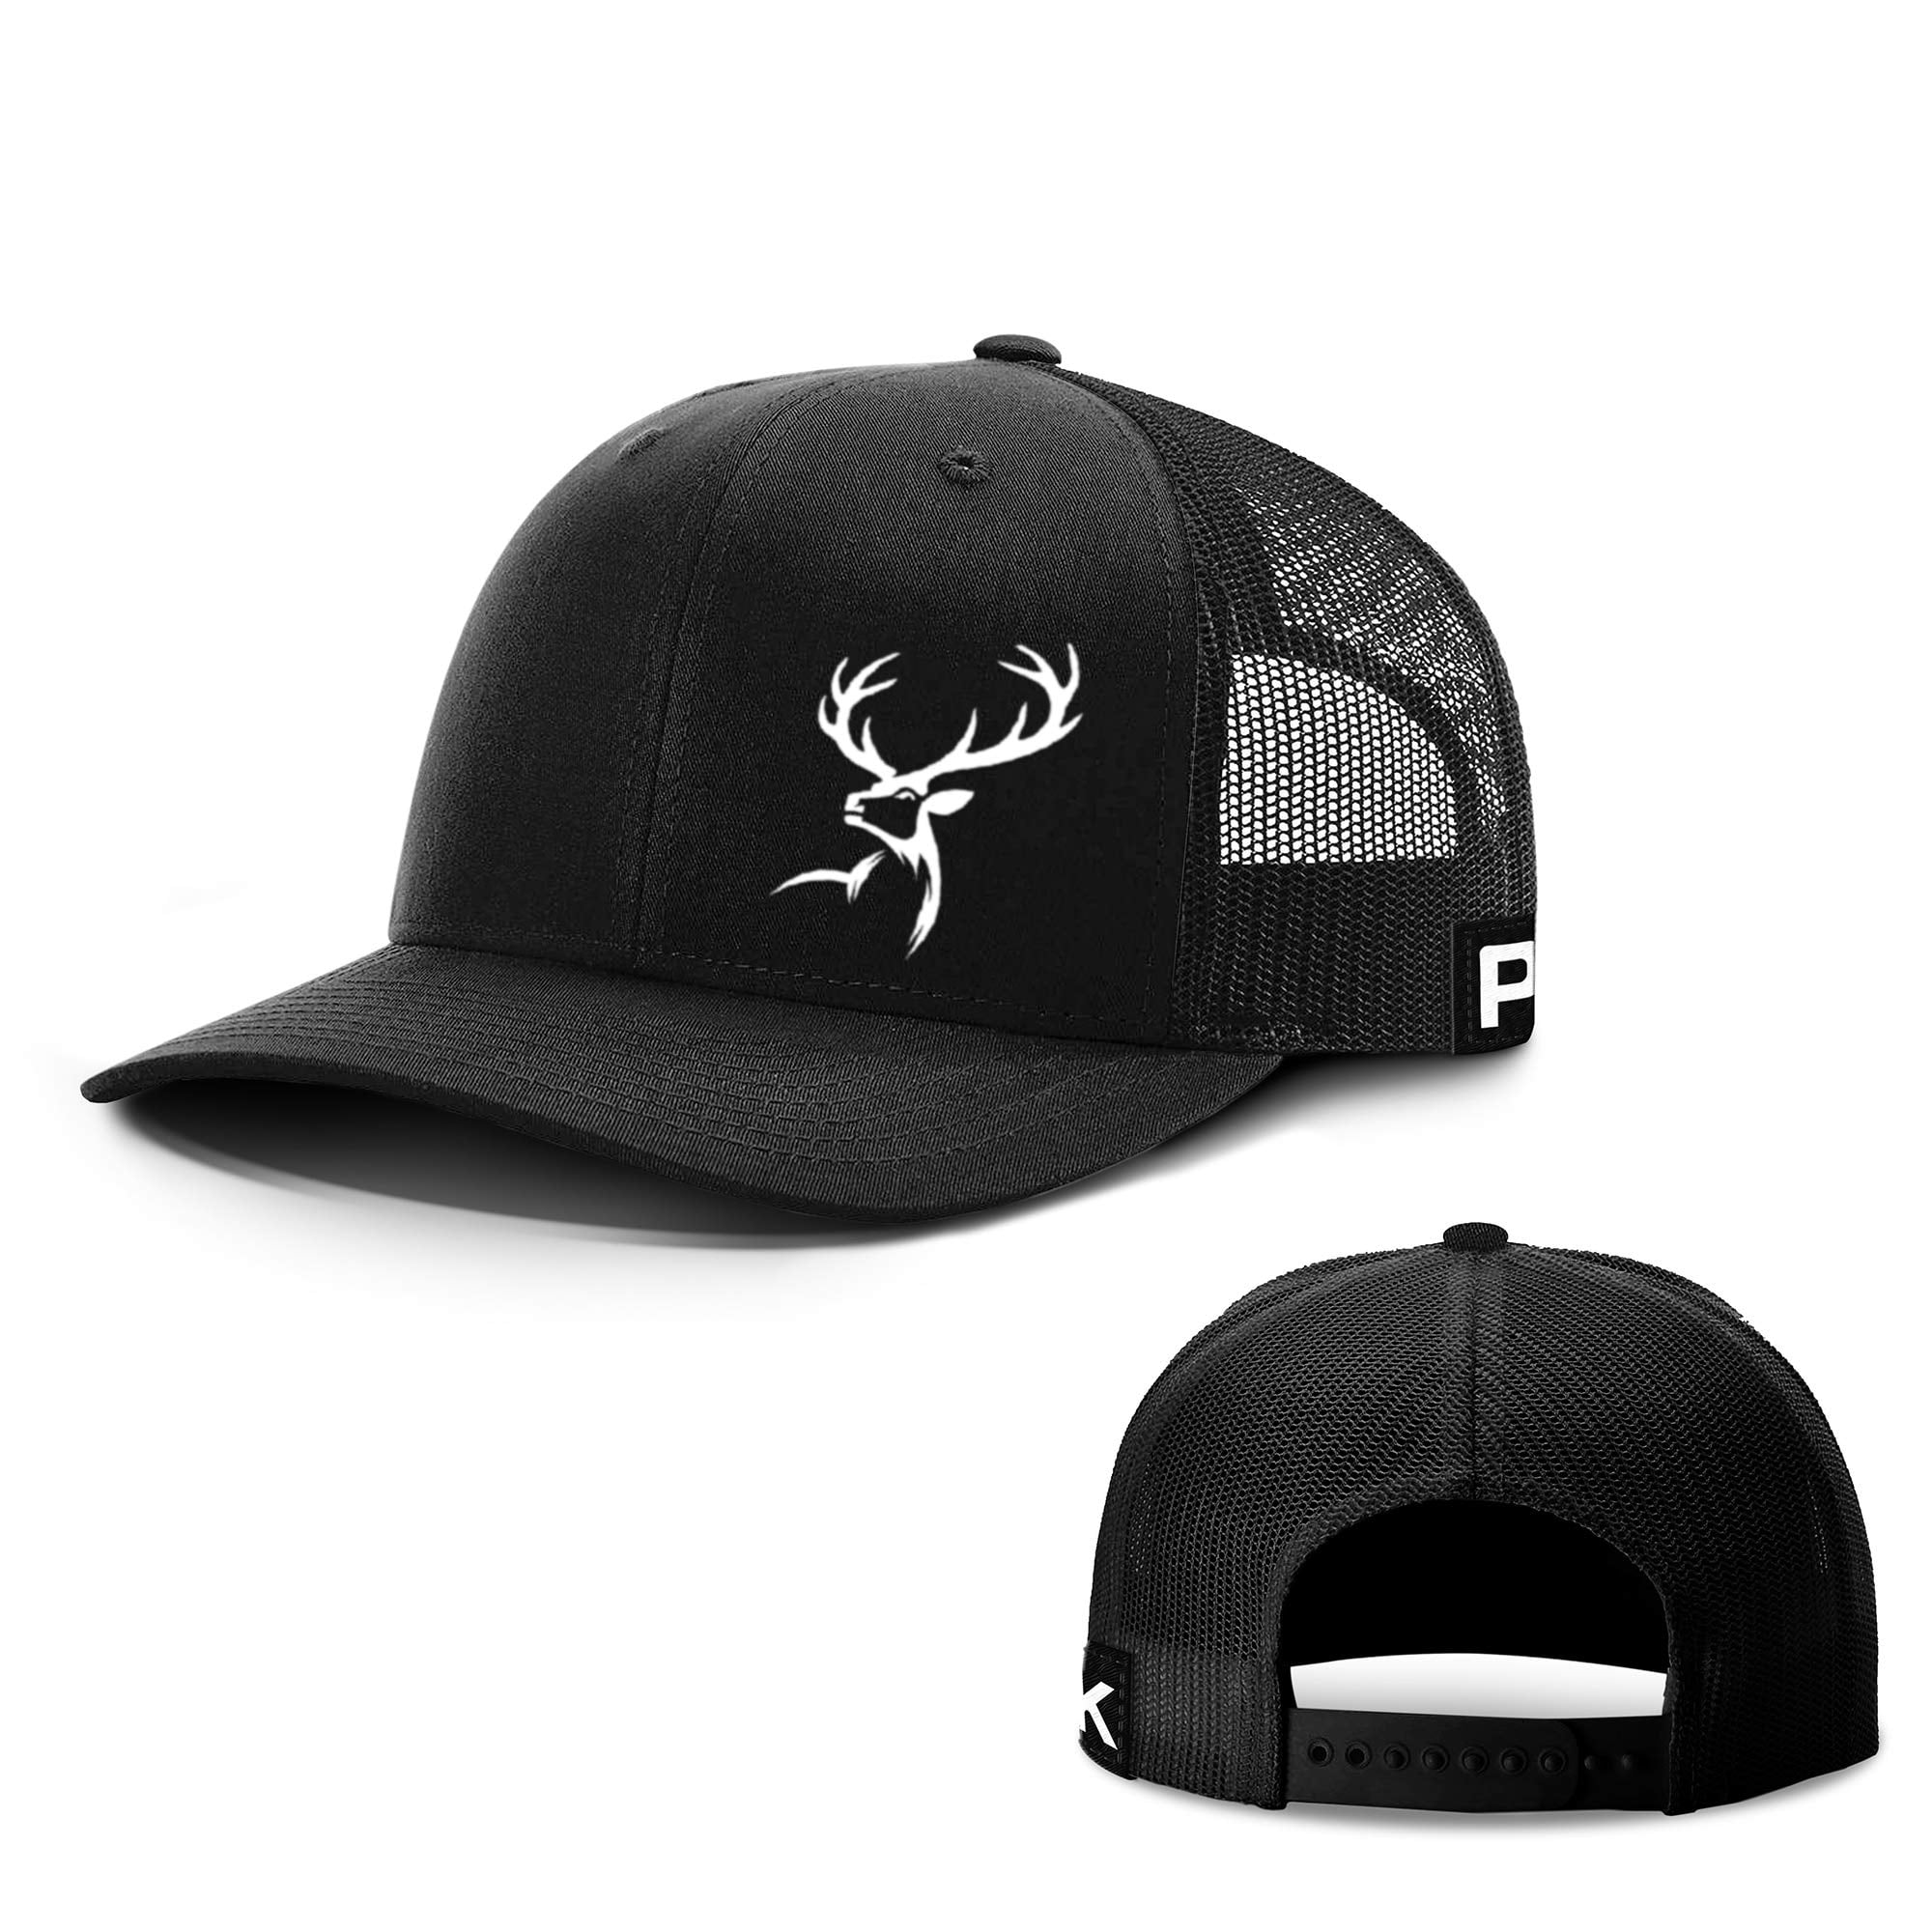 Kicks Baseball Adult Snapback Black Hat Unisex Deer & Printed Hunting Cap Charcoal -